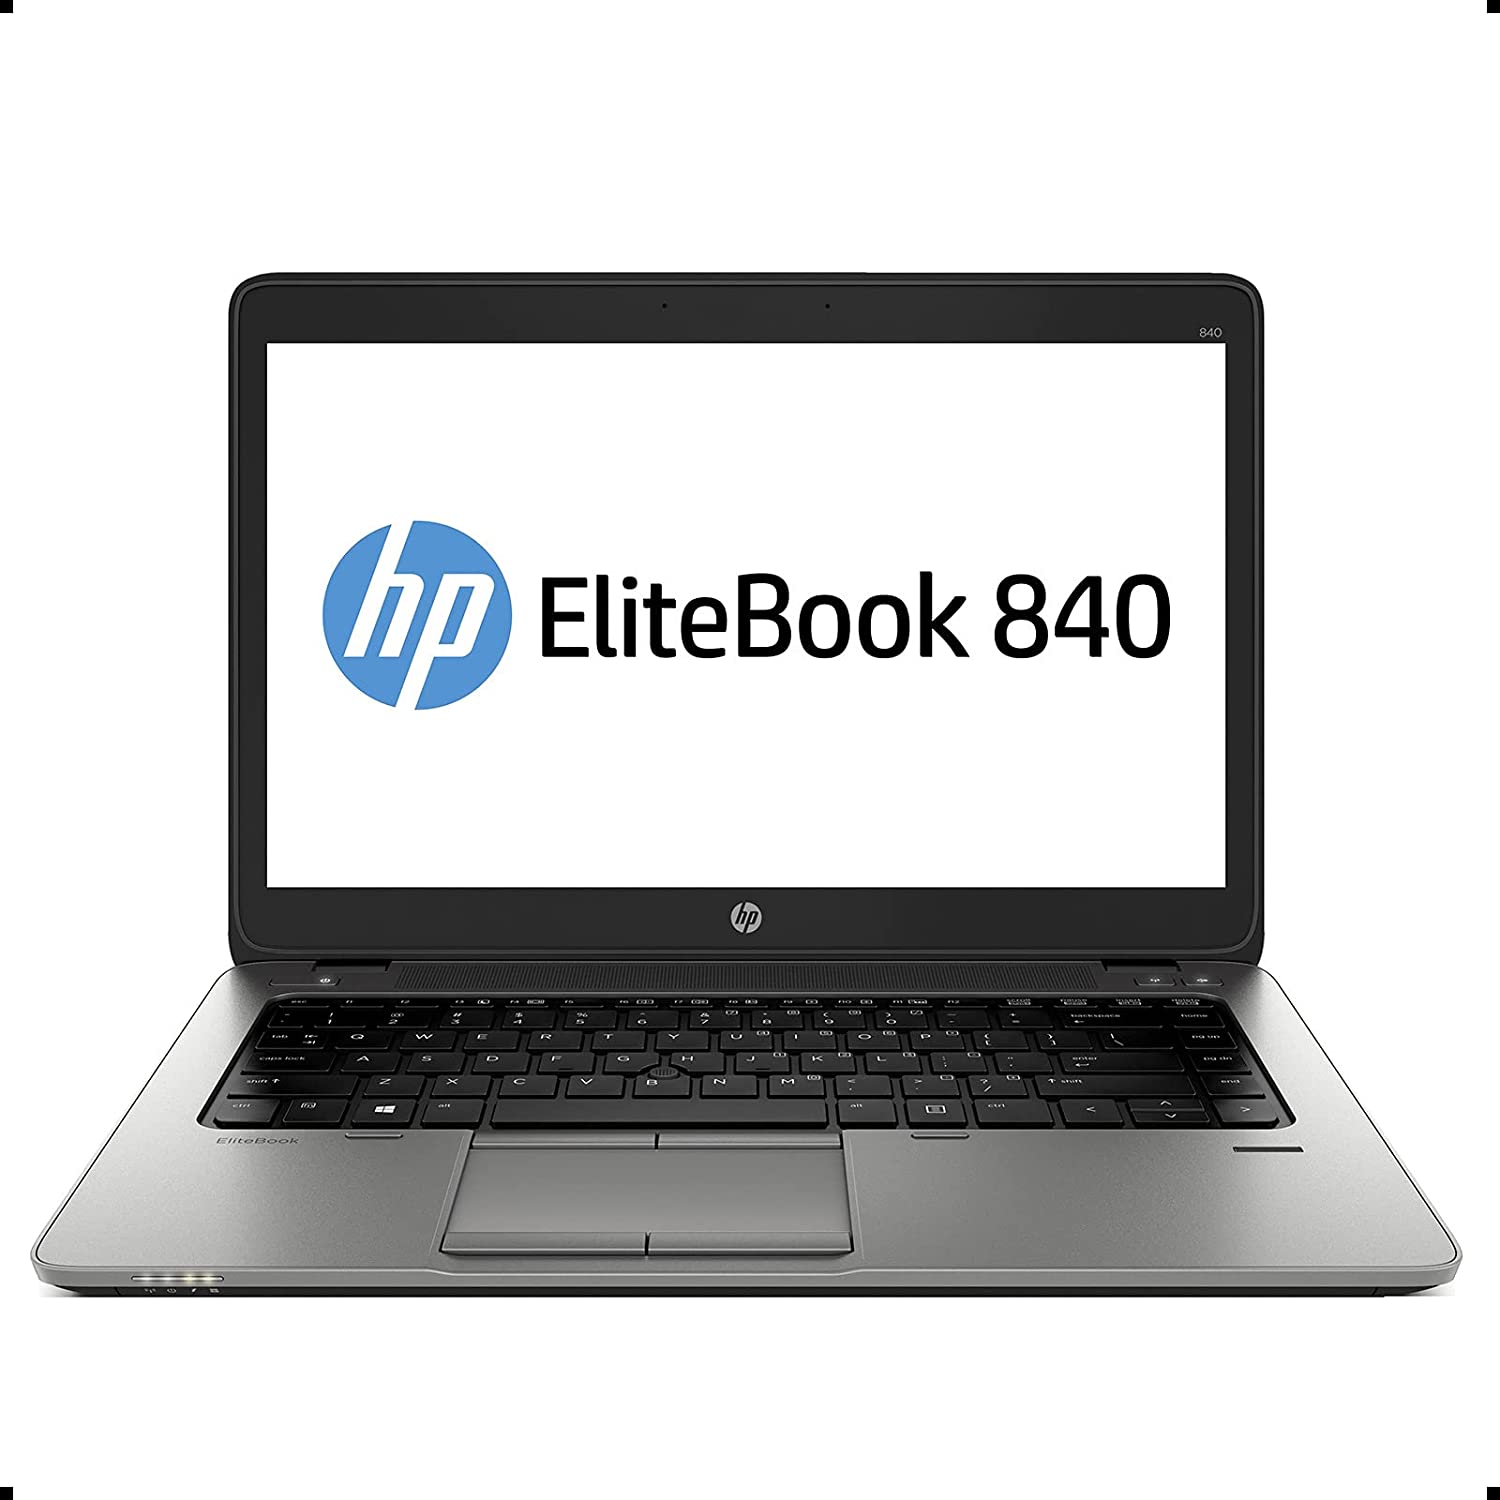 Refurbished HP EliteBook 840 G2 i7, 5th Gen, 8GB RAM, 256GB SSD